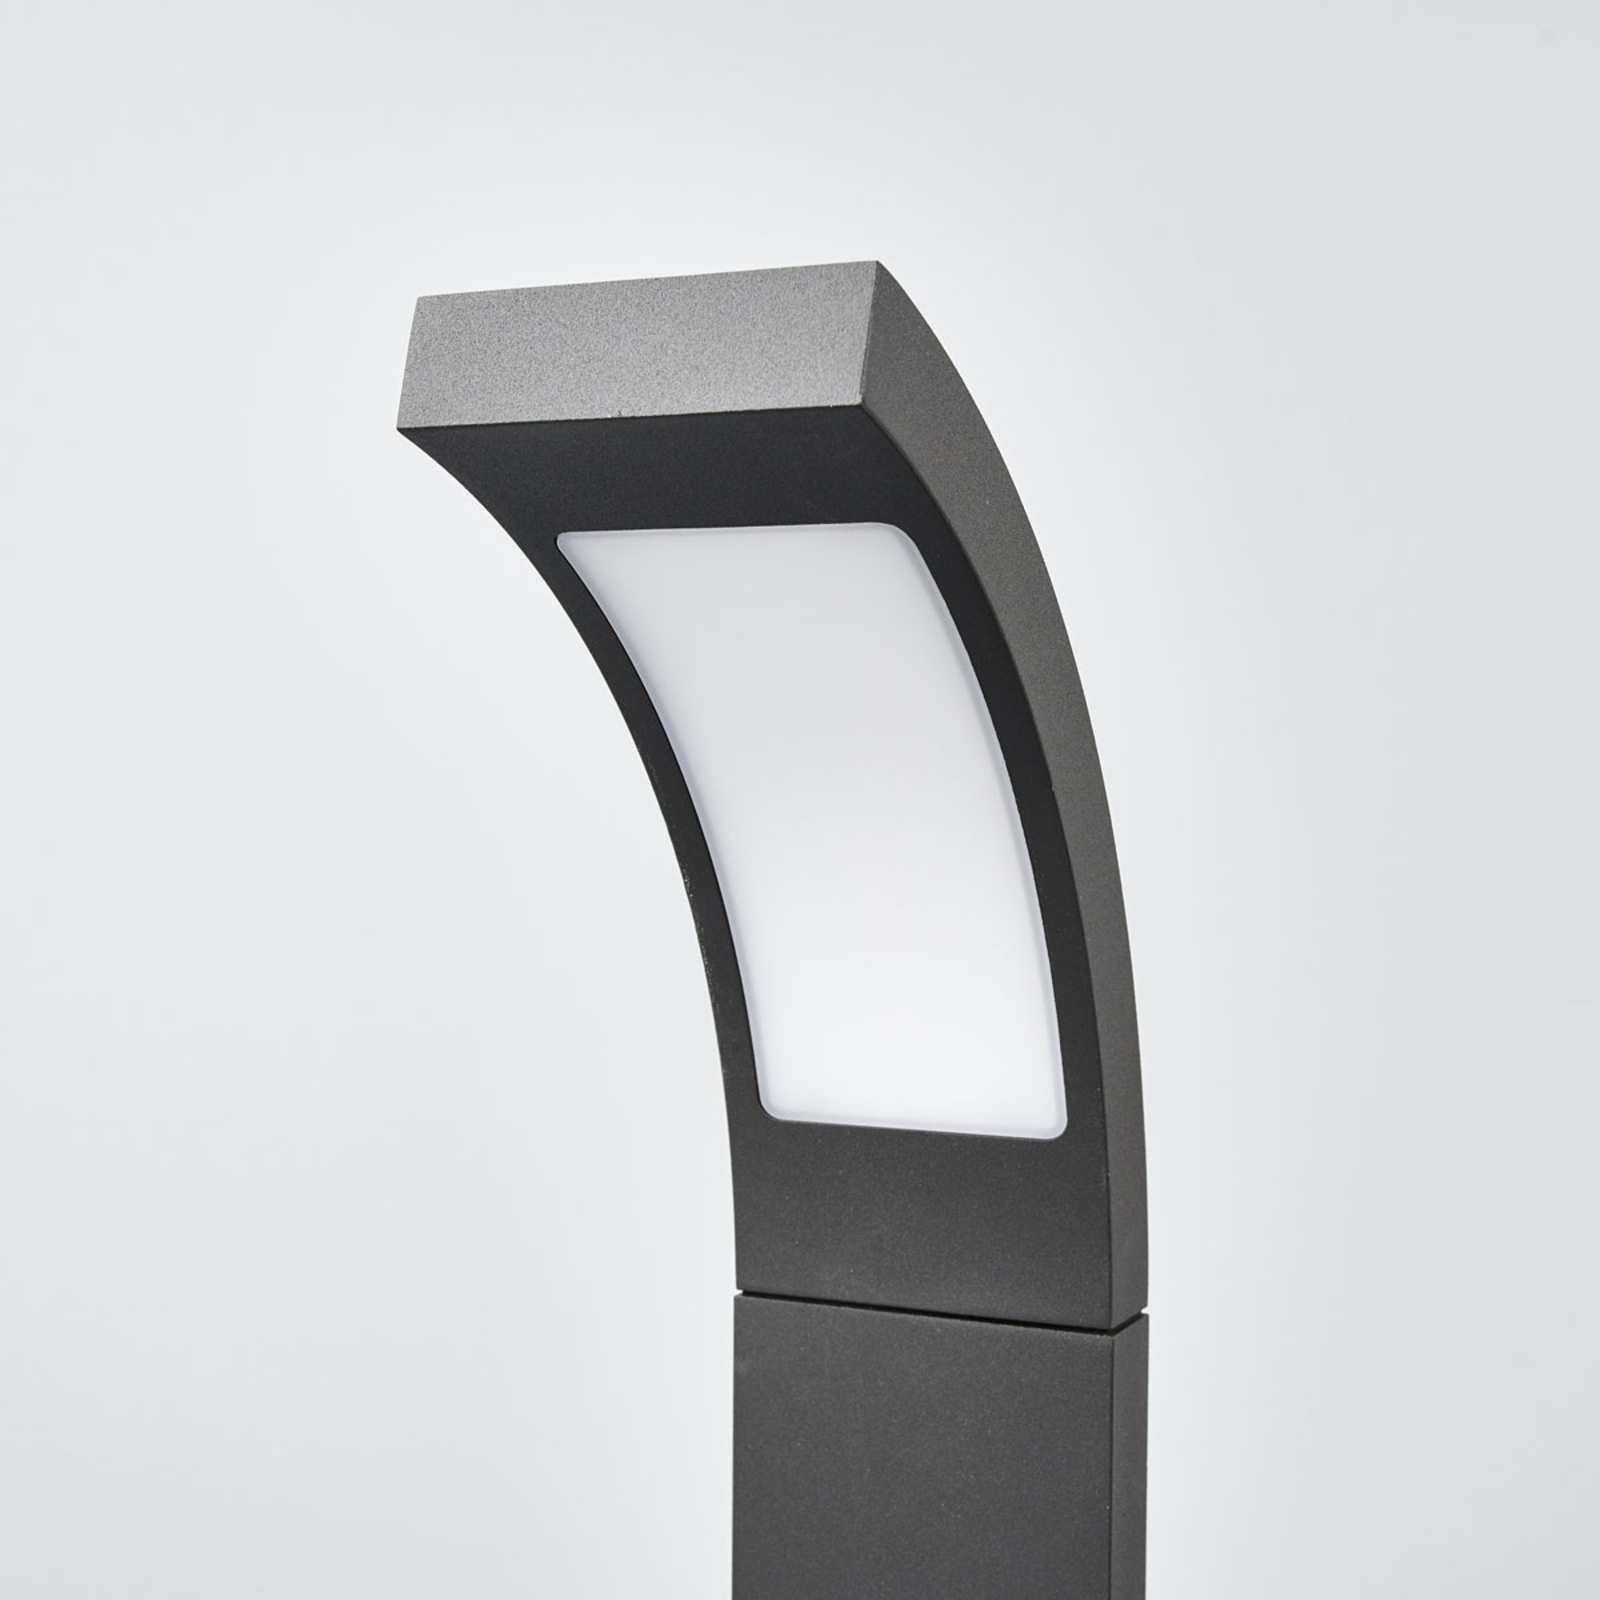 Juvia modern LED pillar light in graphite grey